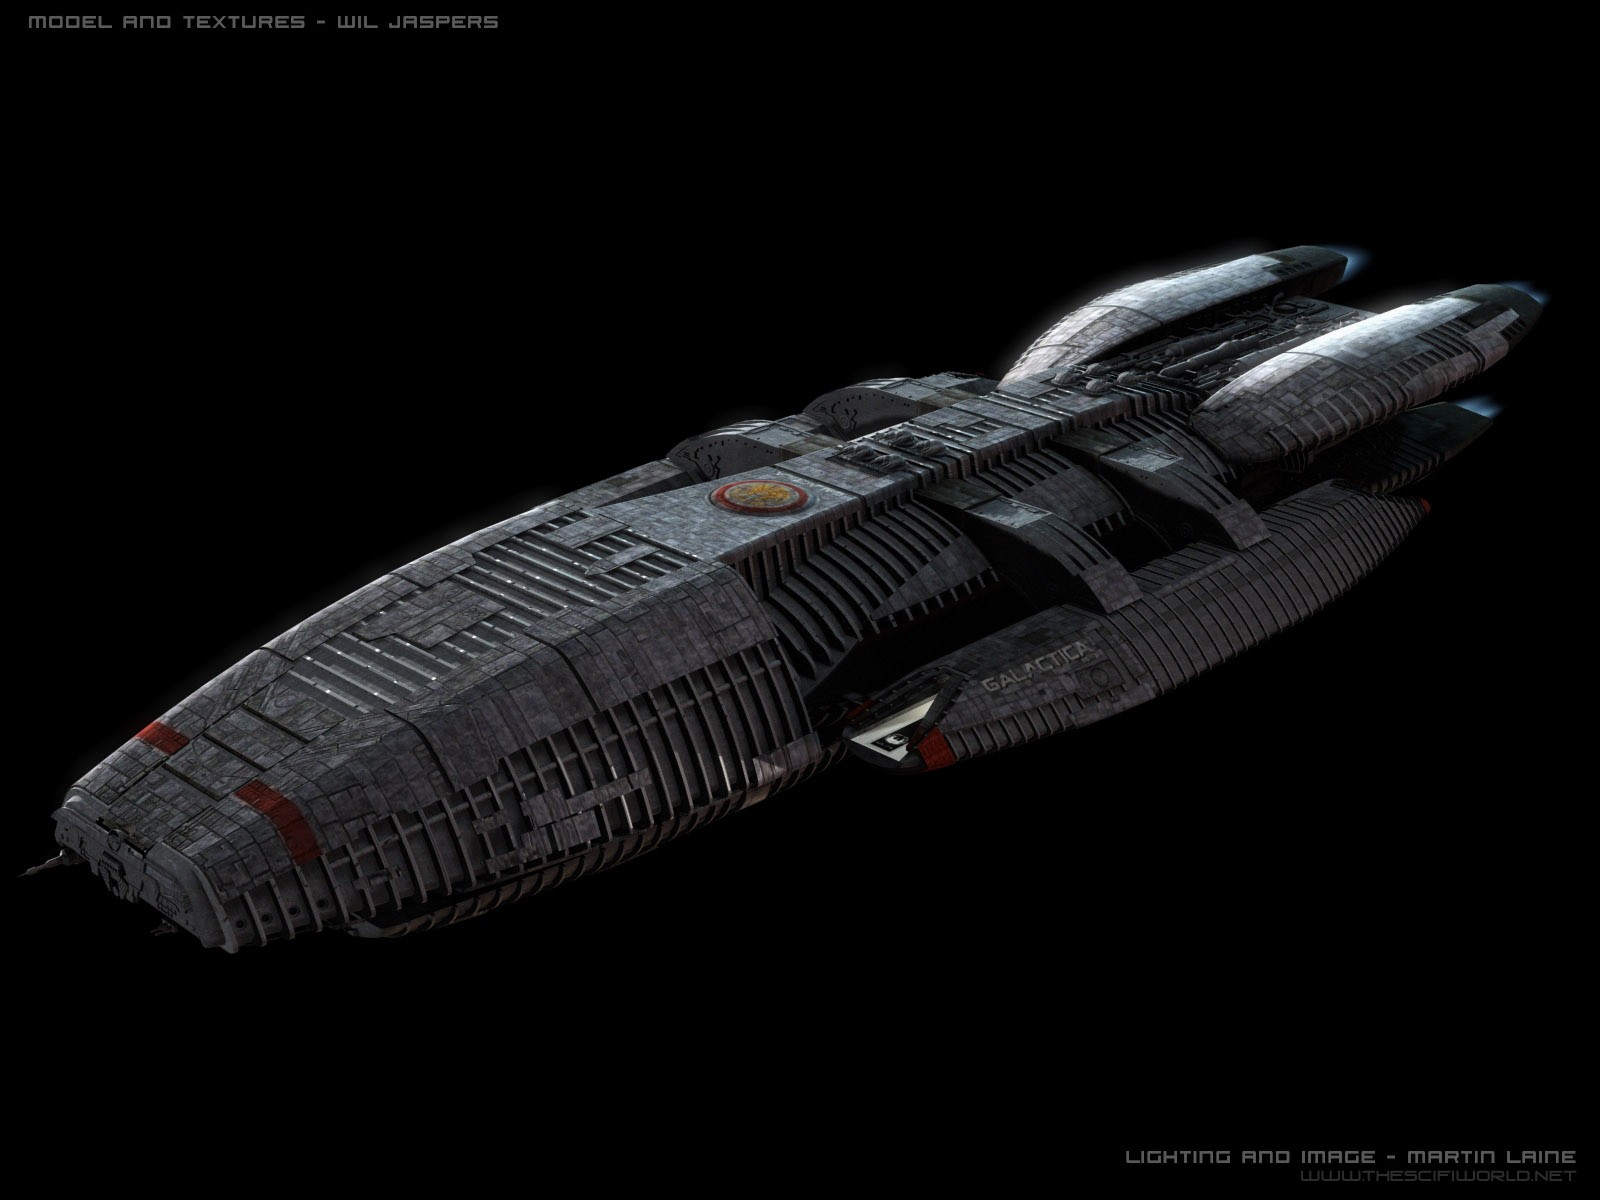 General 1600x1200 Battlestar Galactica spaceship 2004 (Year) CGI TV series science fiction